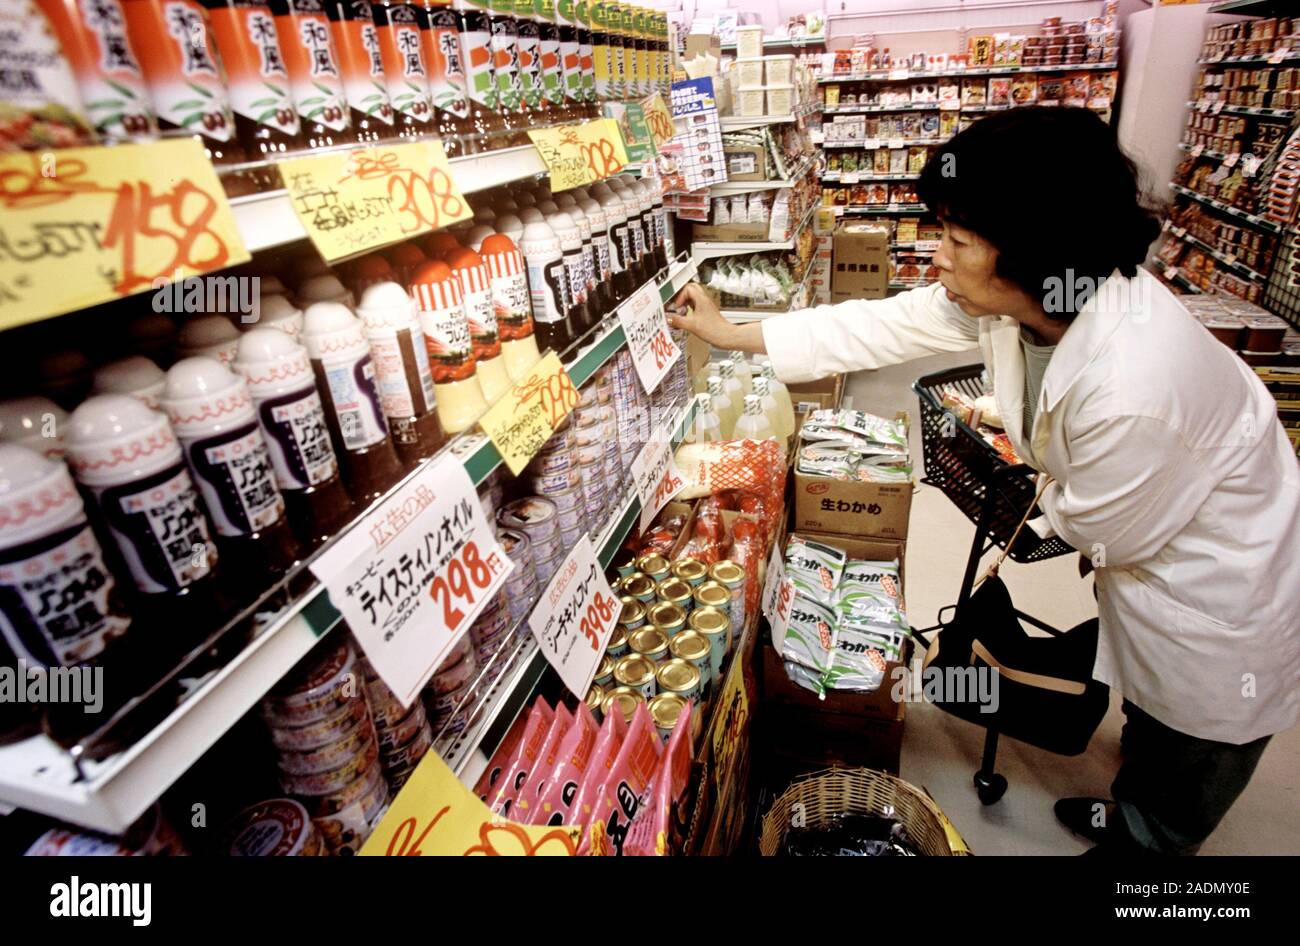 Japanese Supermarket Customer Shopping In A Supermarket In Kodaira City Japan Stock Photo Alamy